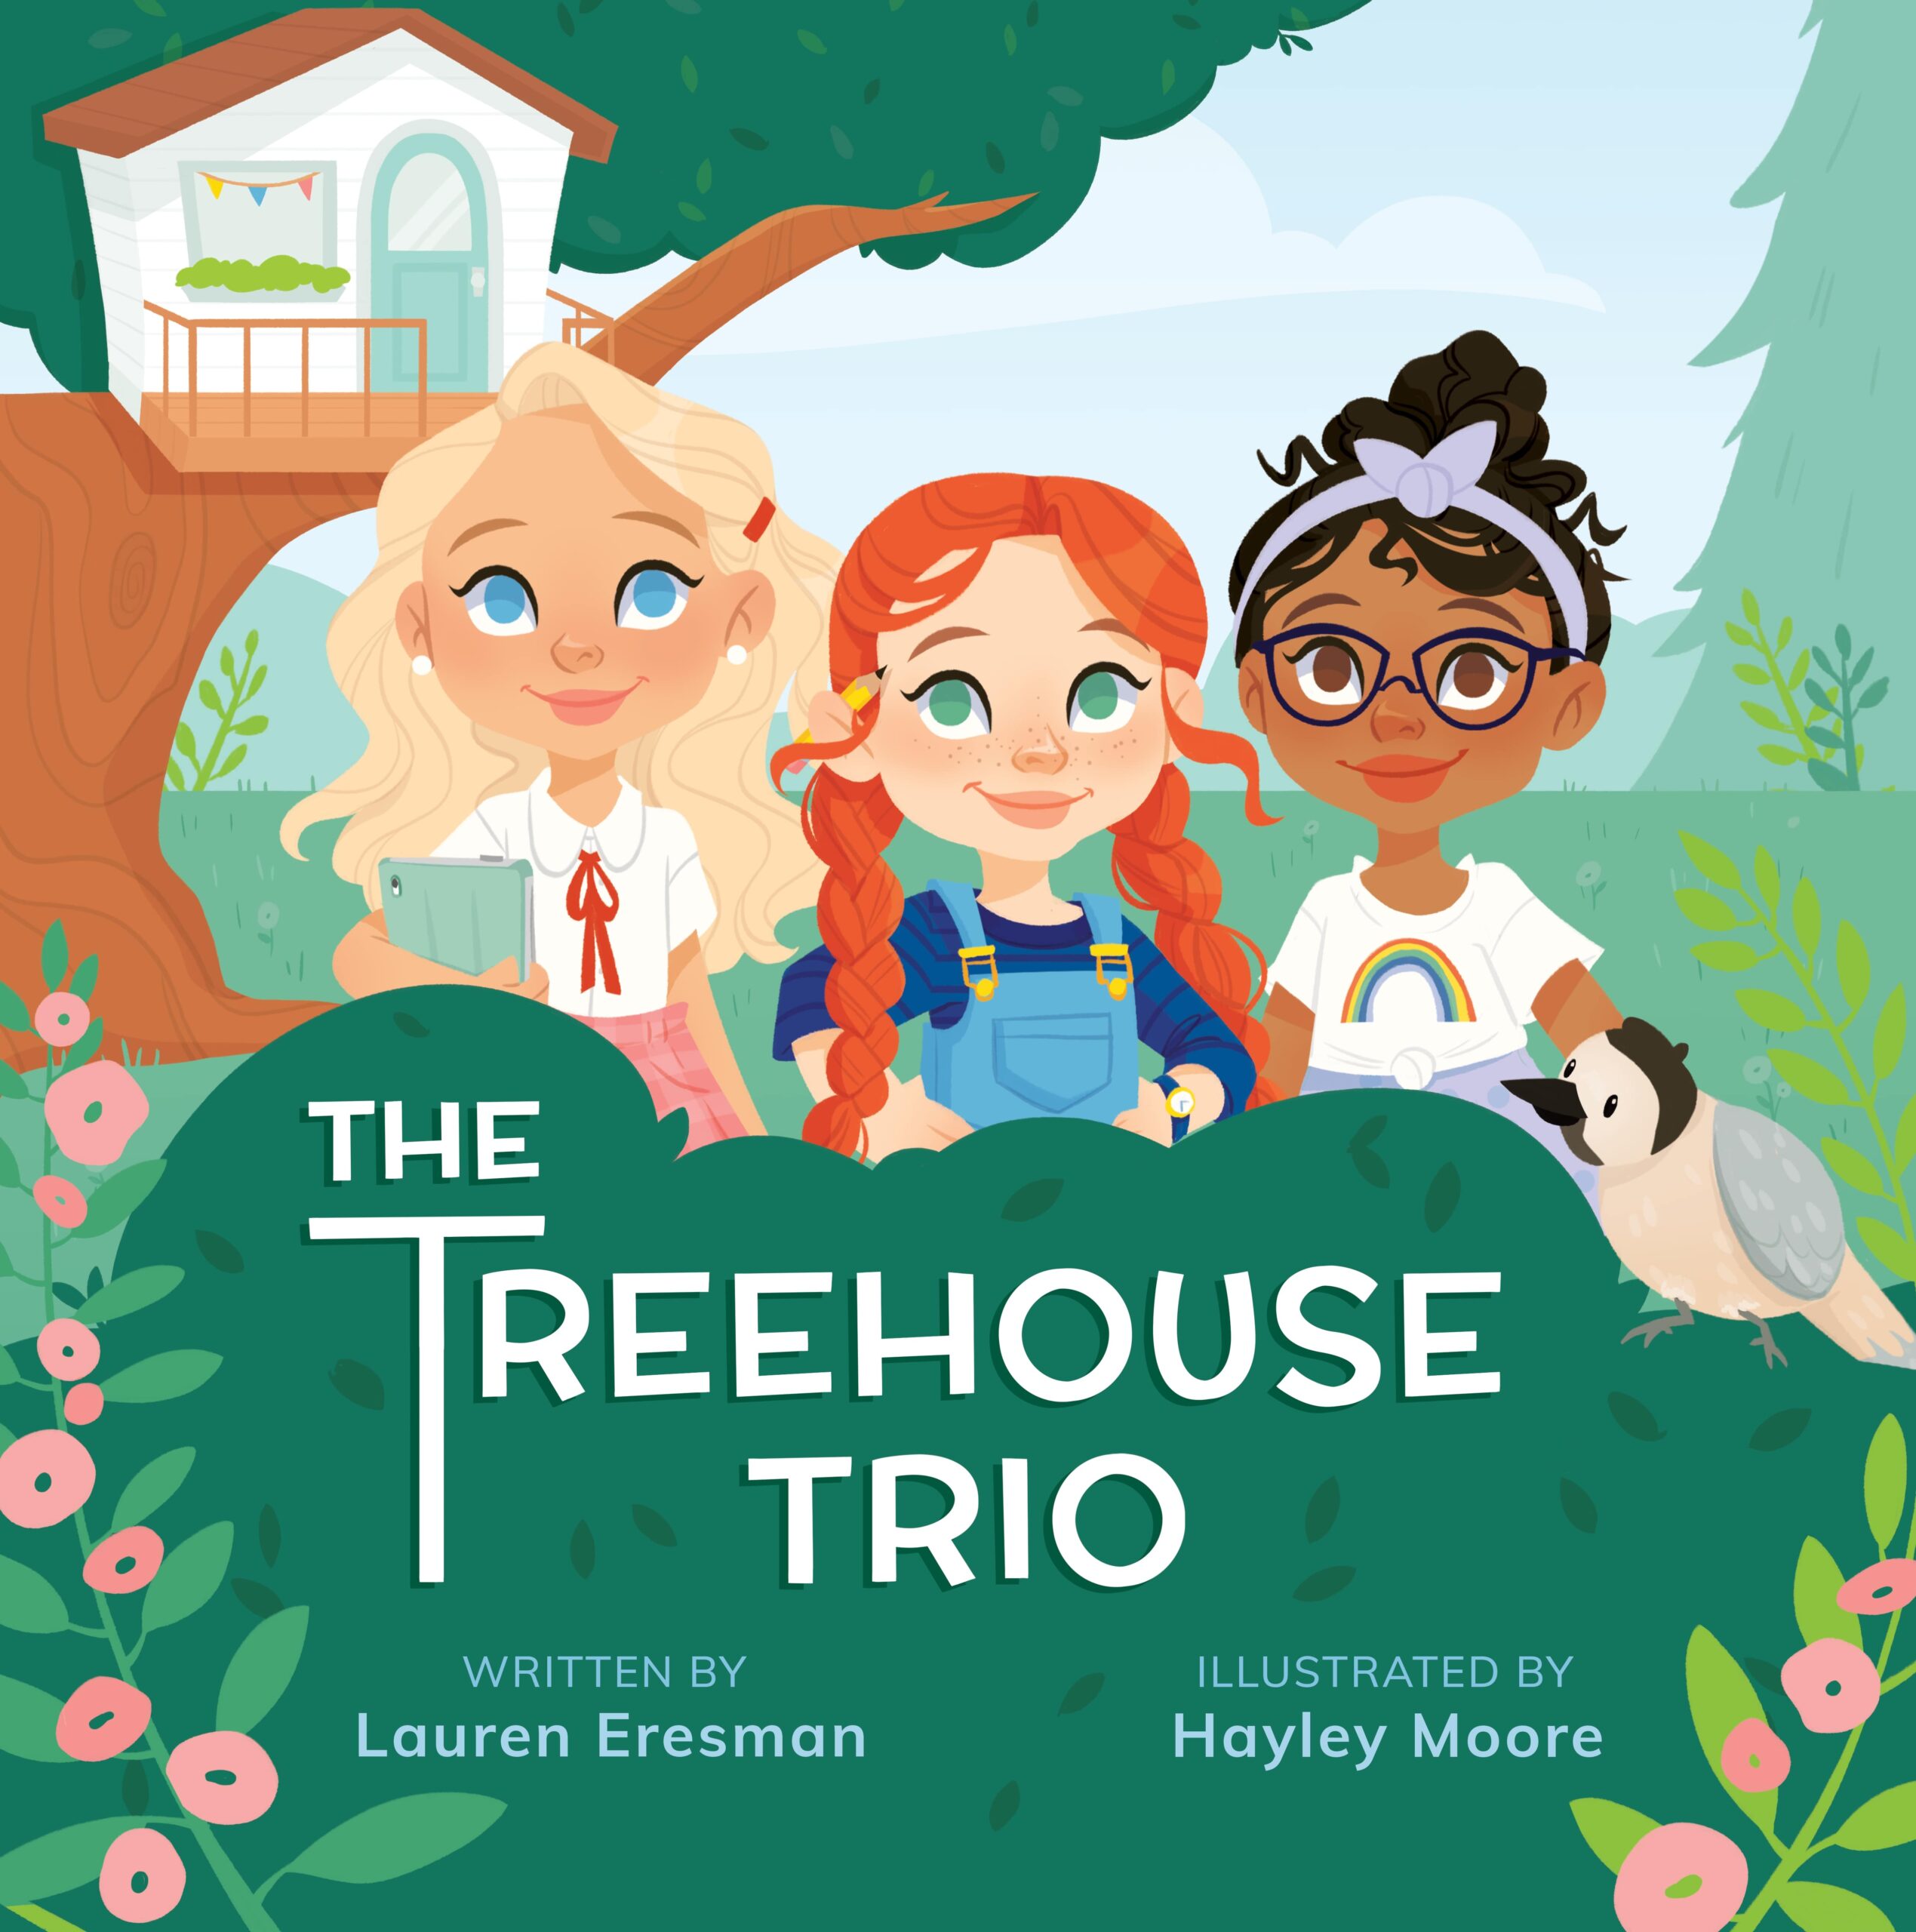 FREE: The Treehouse Trio by Lauren Eresman